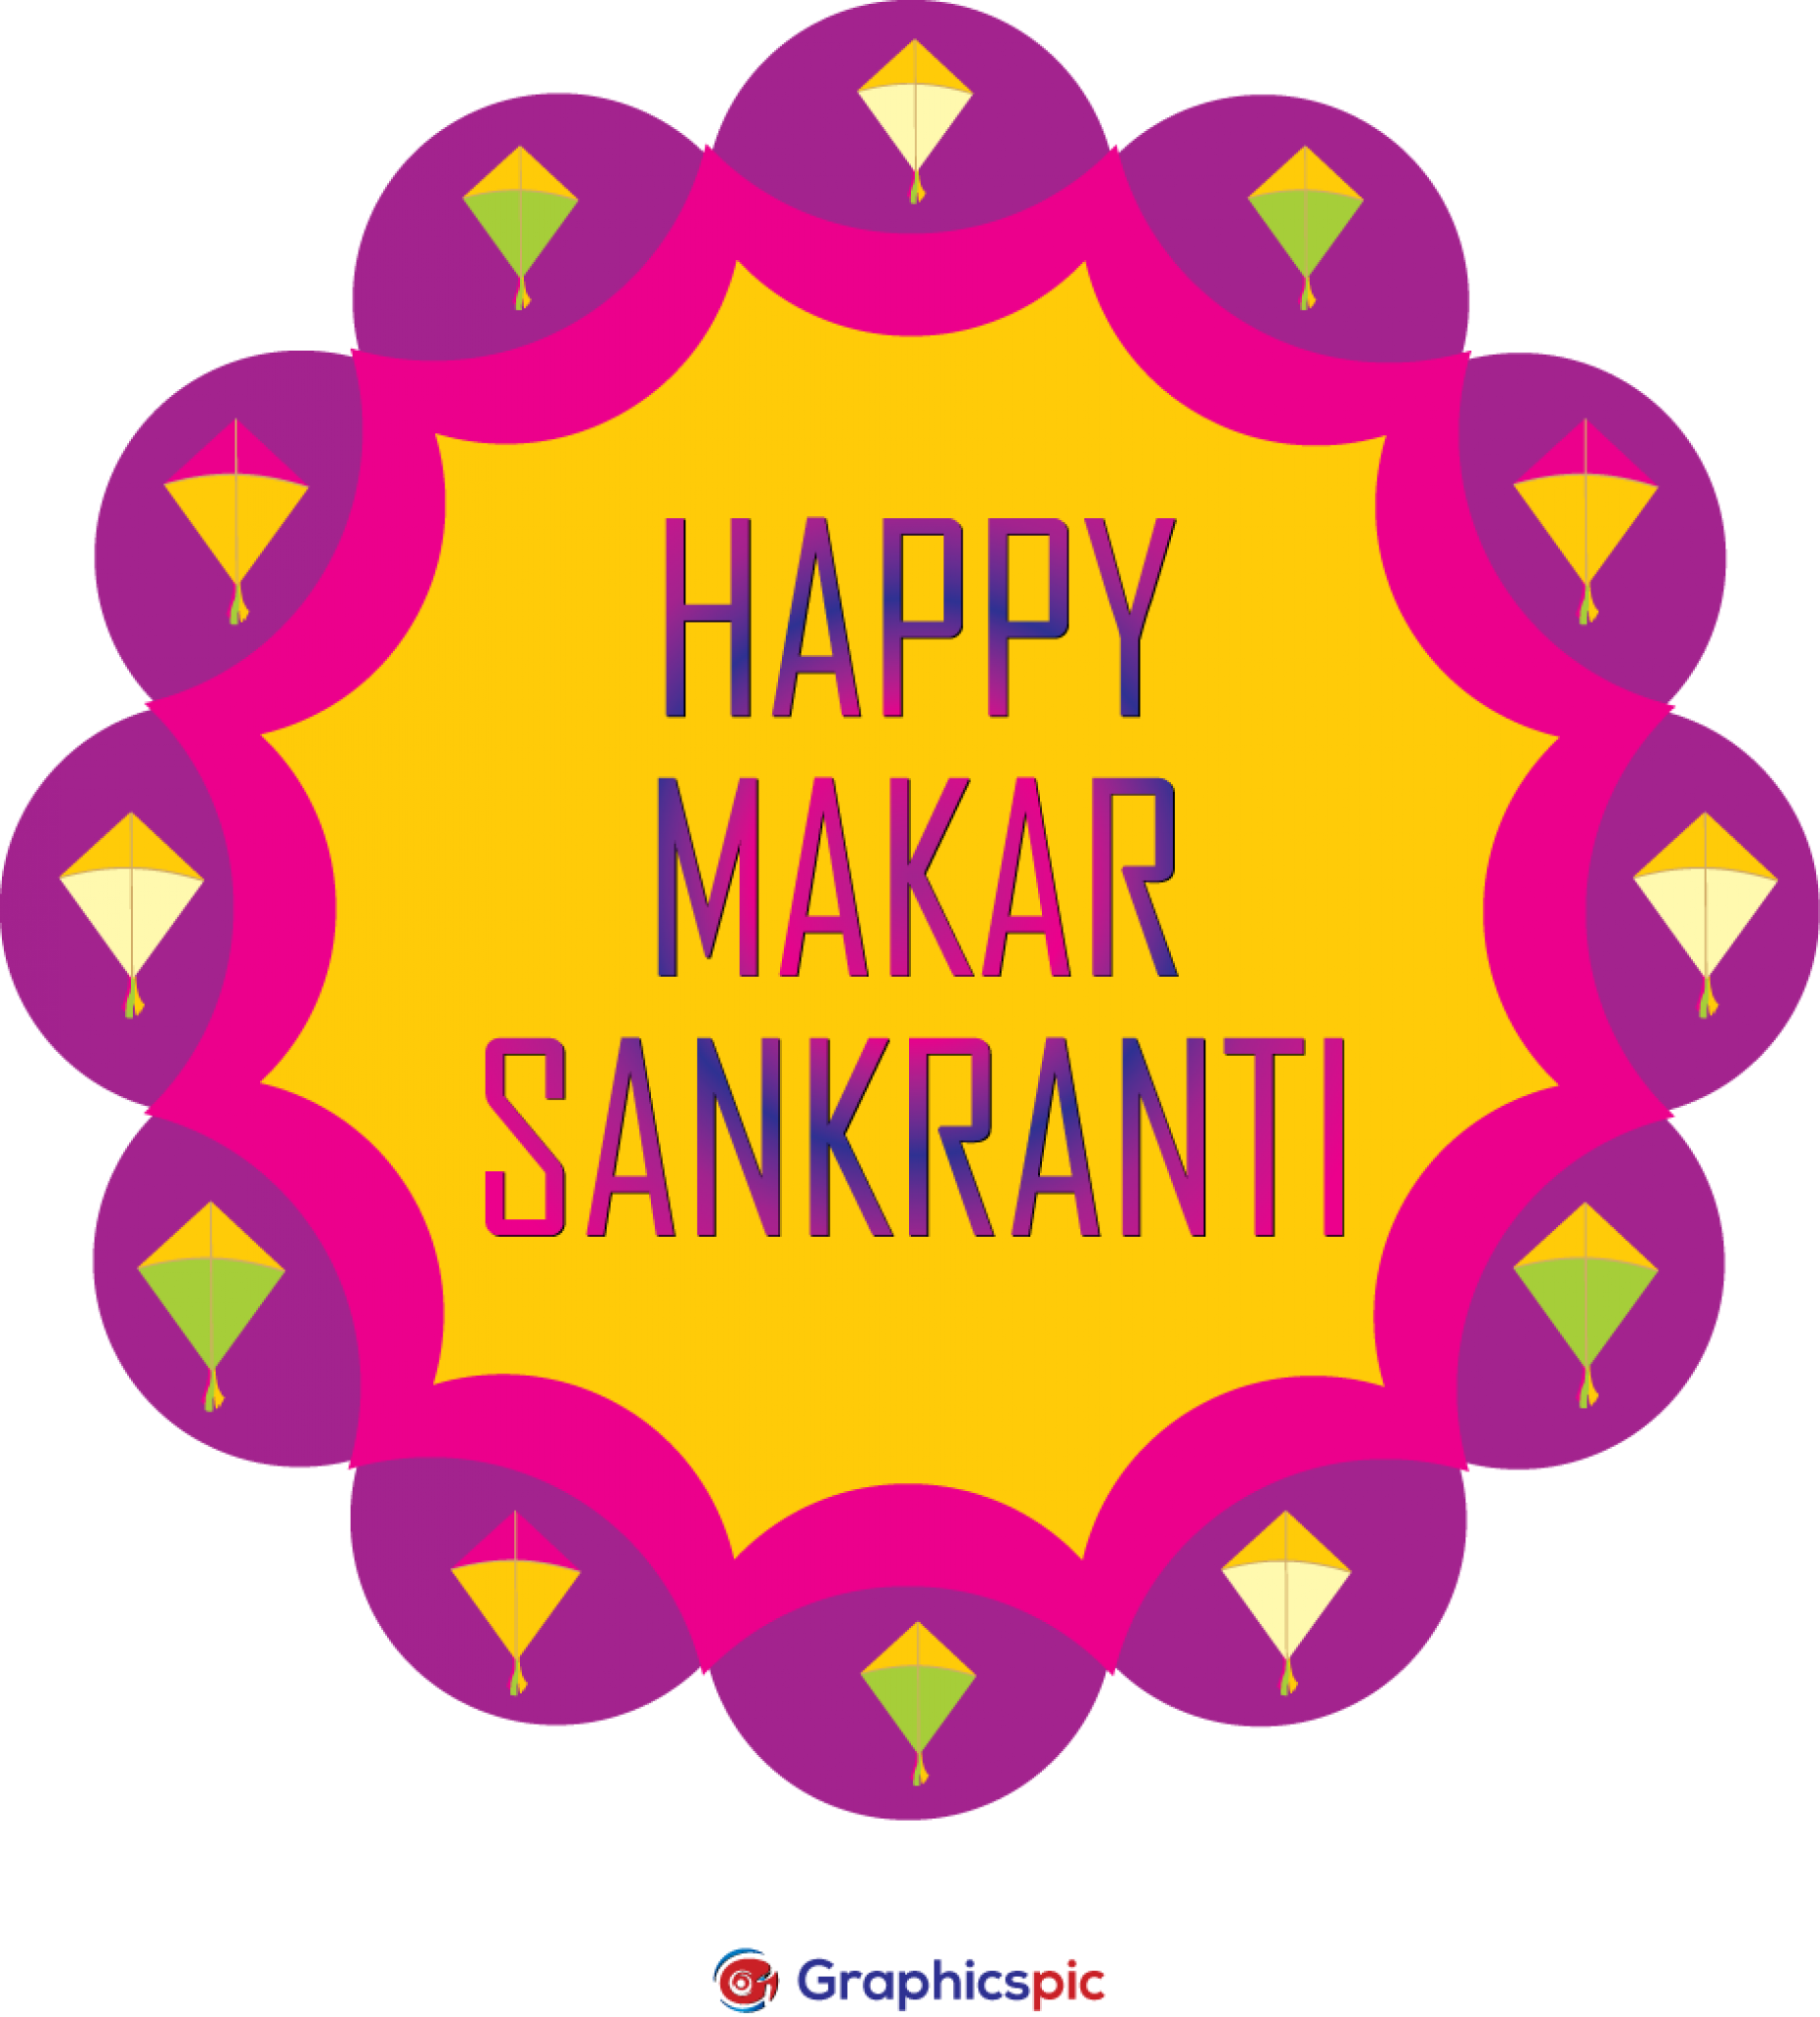 Happy Makar Sankranti Festival Card With Kite Design Free Vector